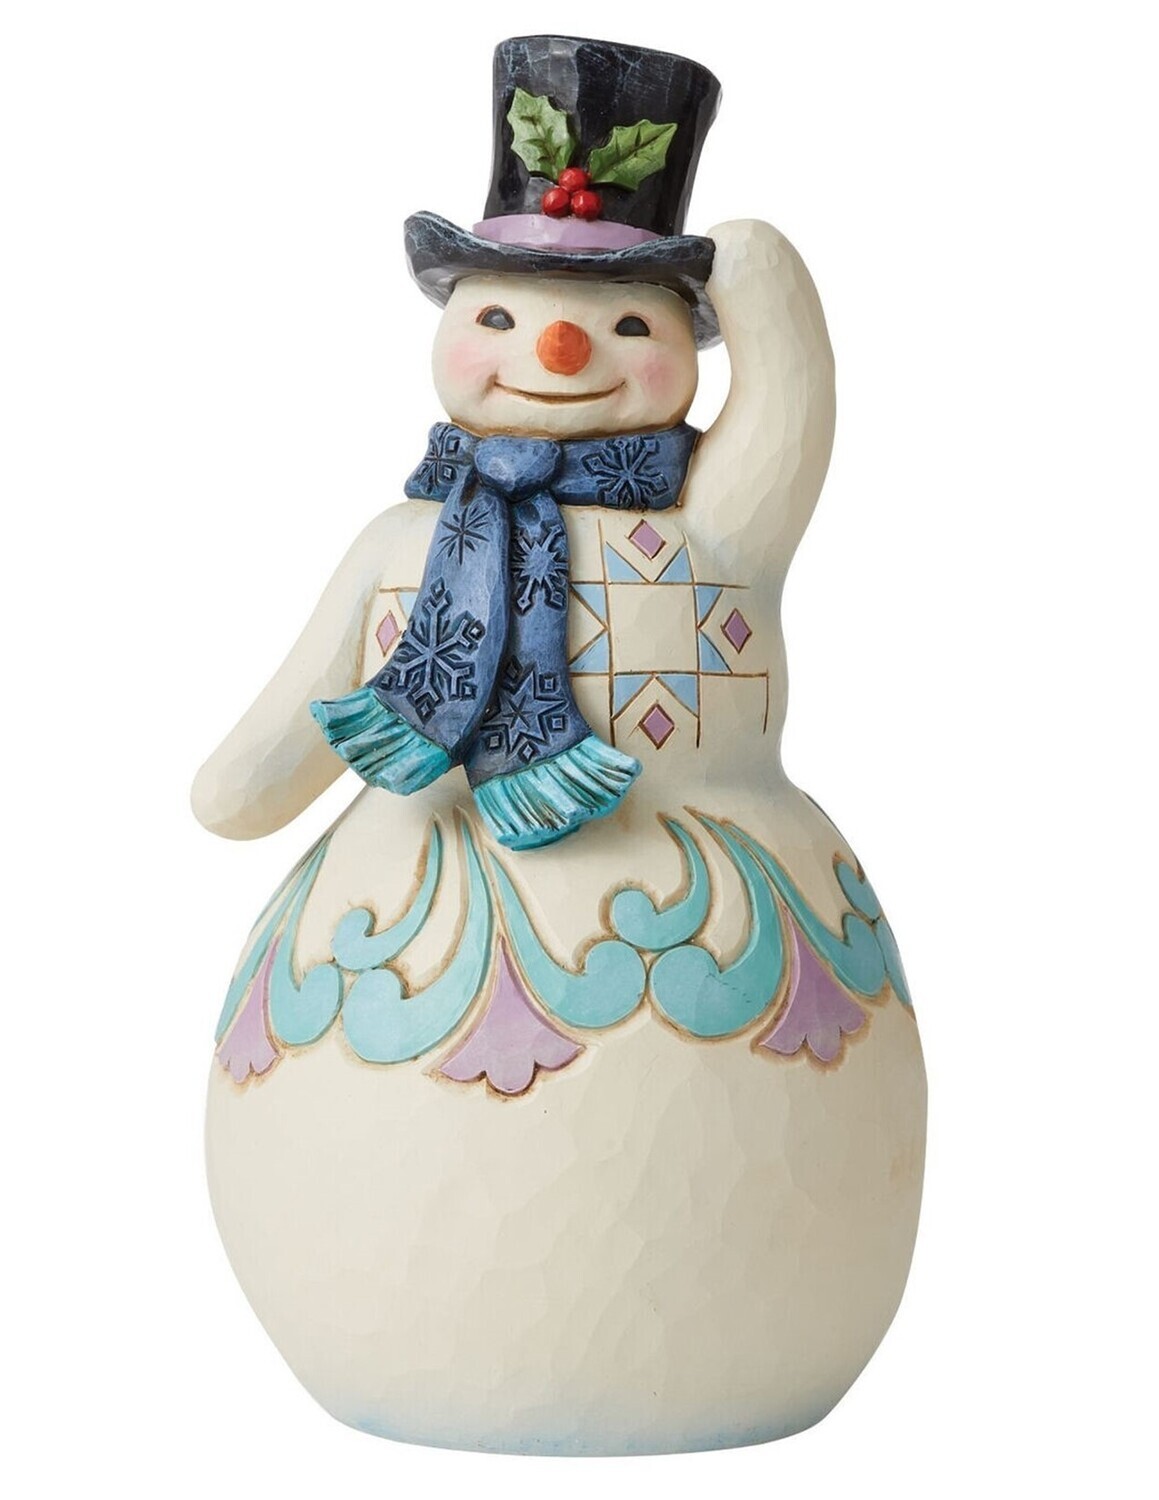 Jim Shore Heartwood Creek "Jolly & Joyful" Snowman with Top Hat Figurine (6008121)